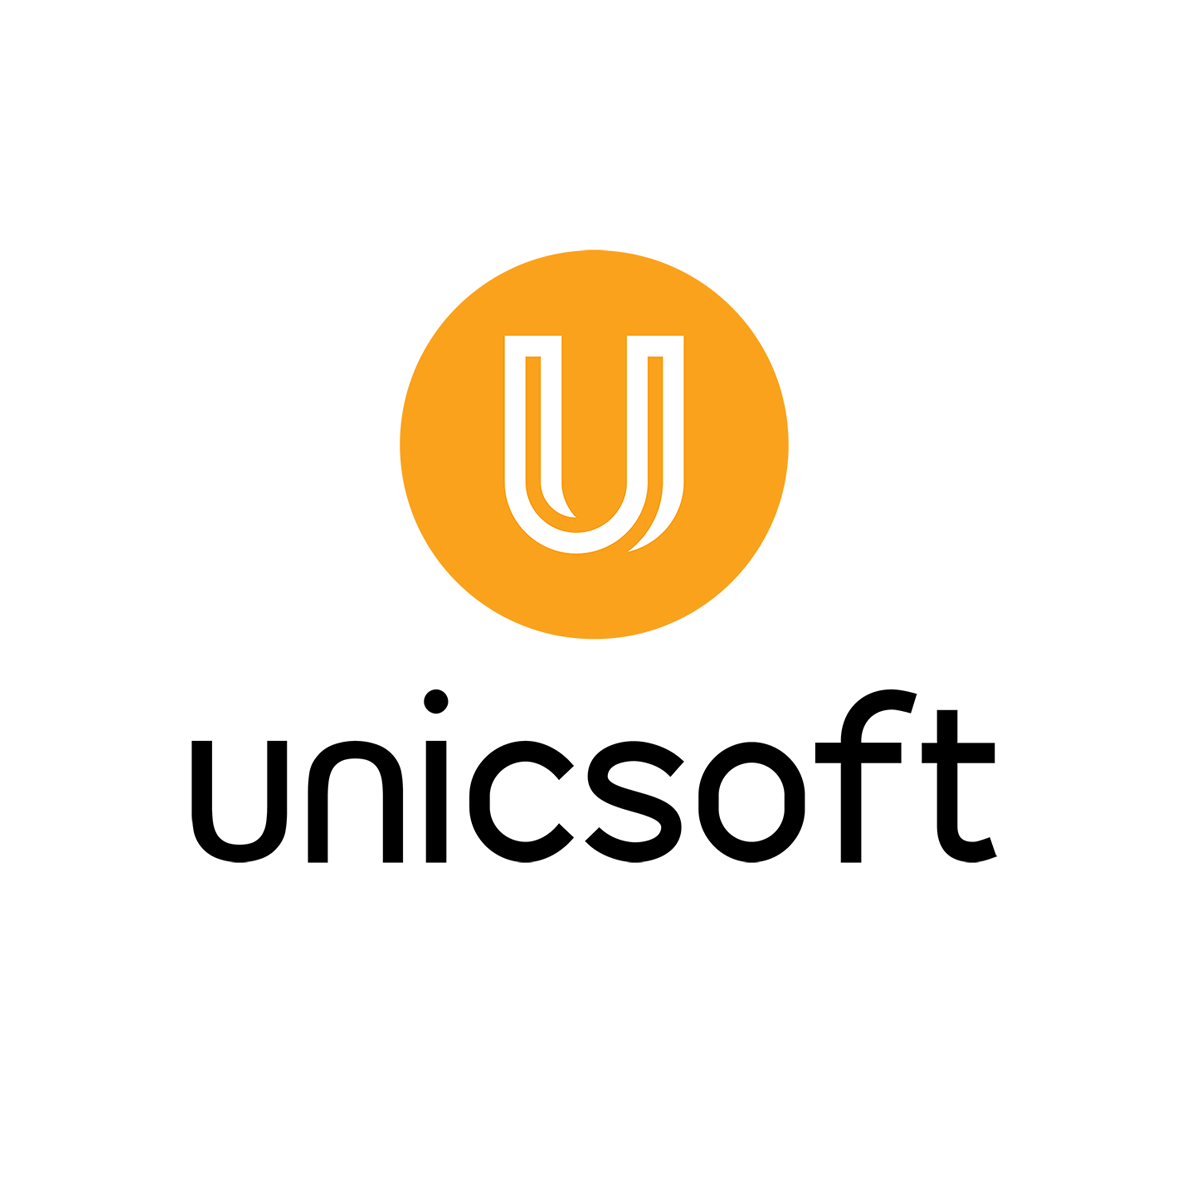 Unicsoft profile on Qualified.One